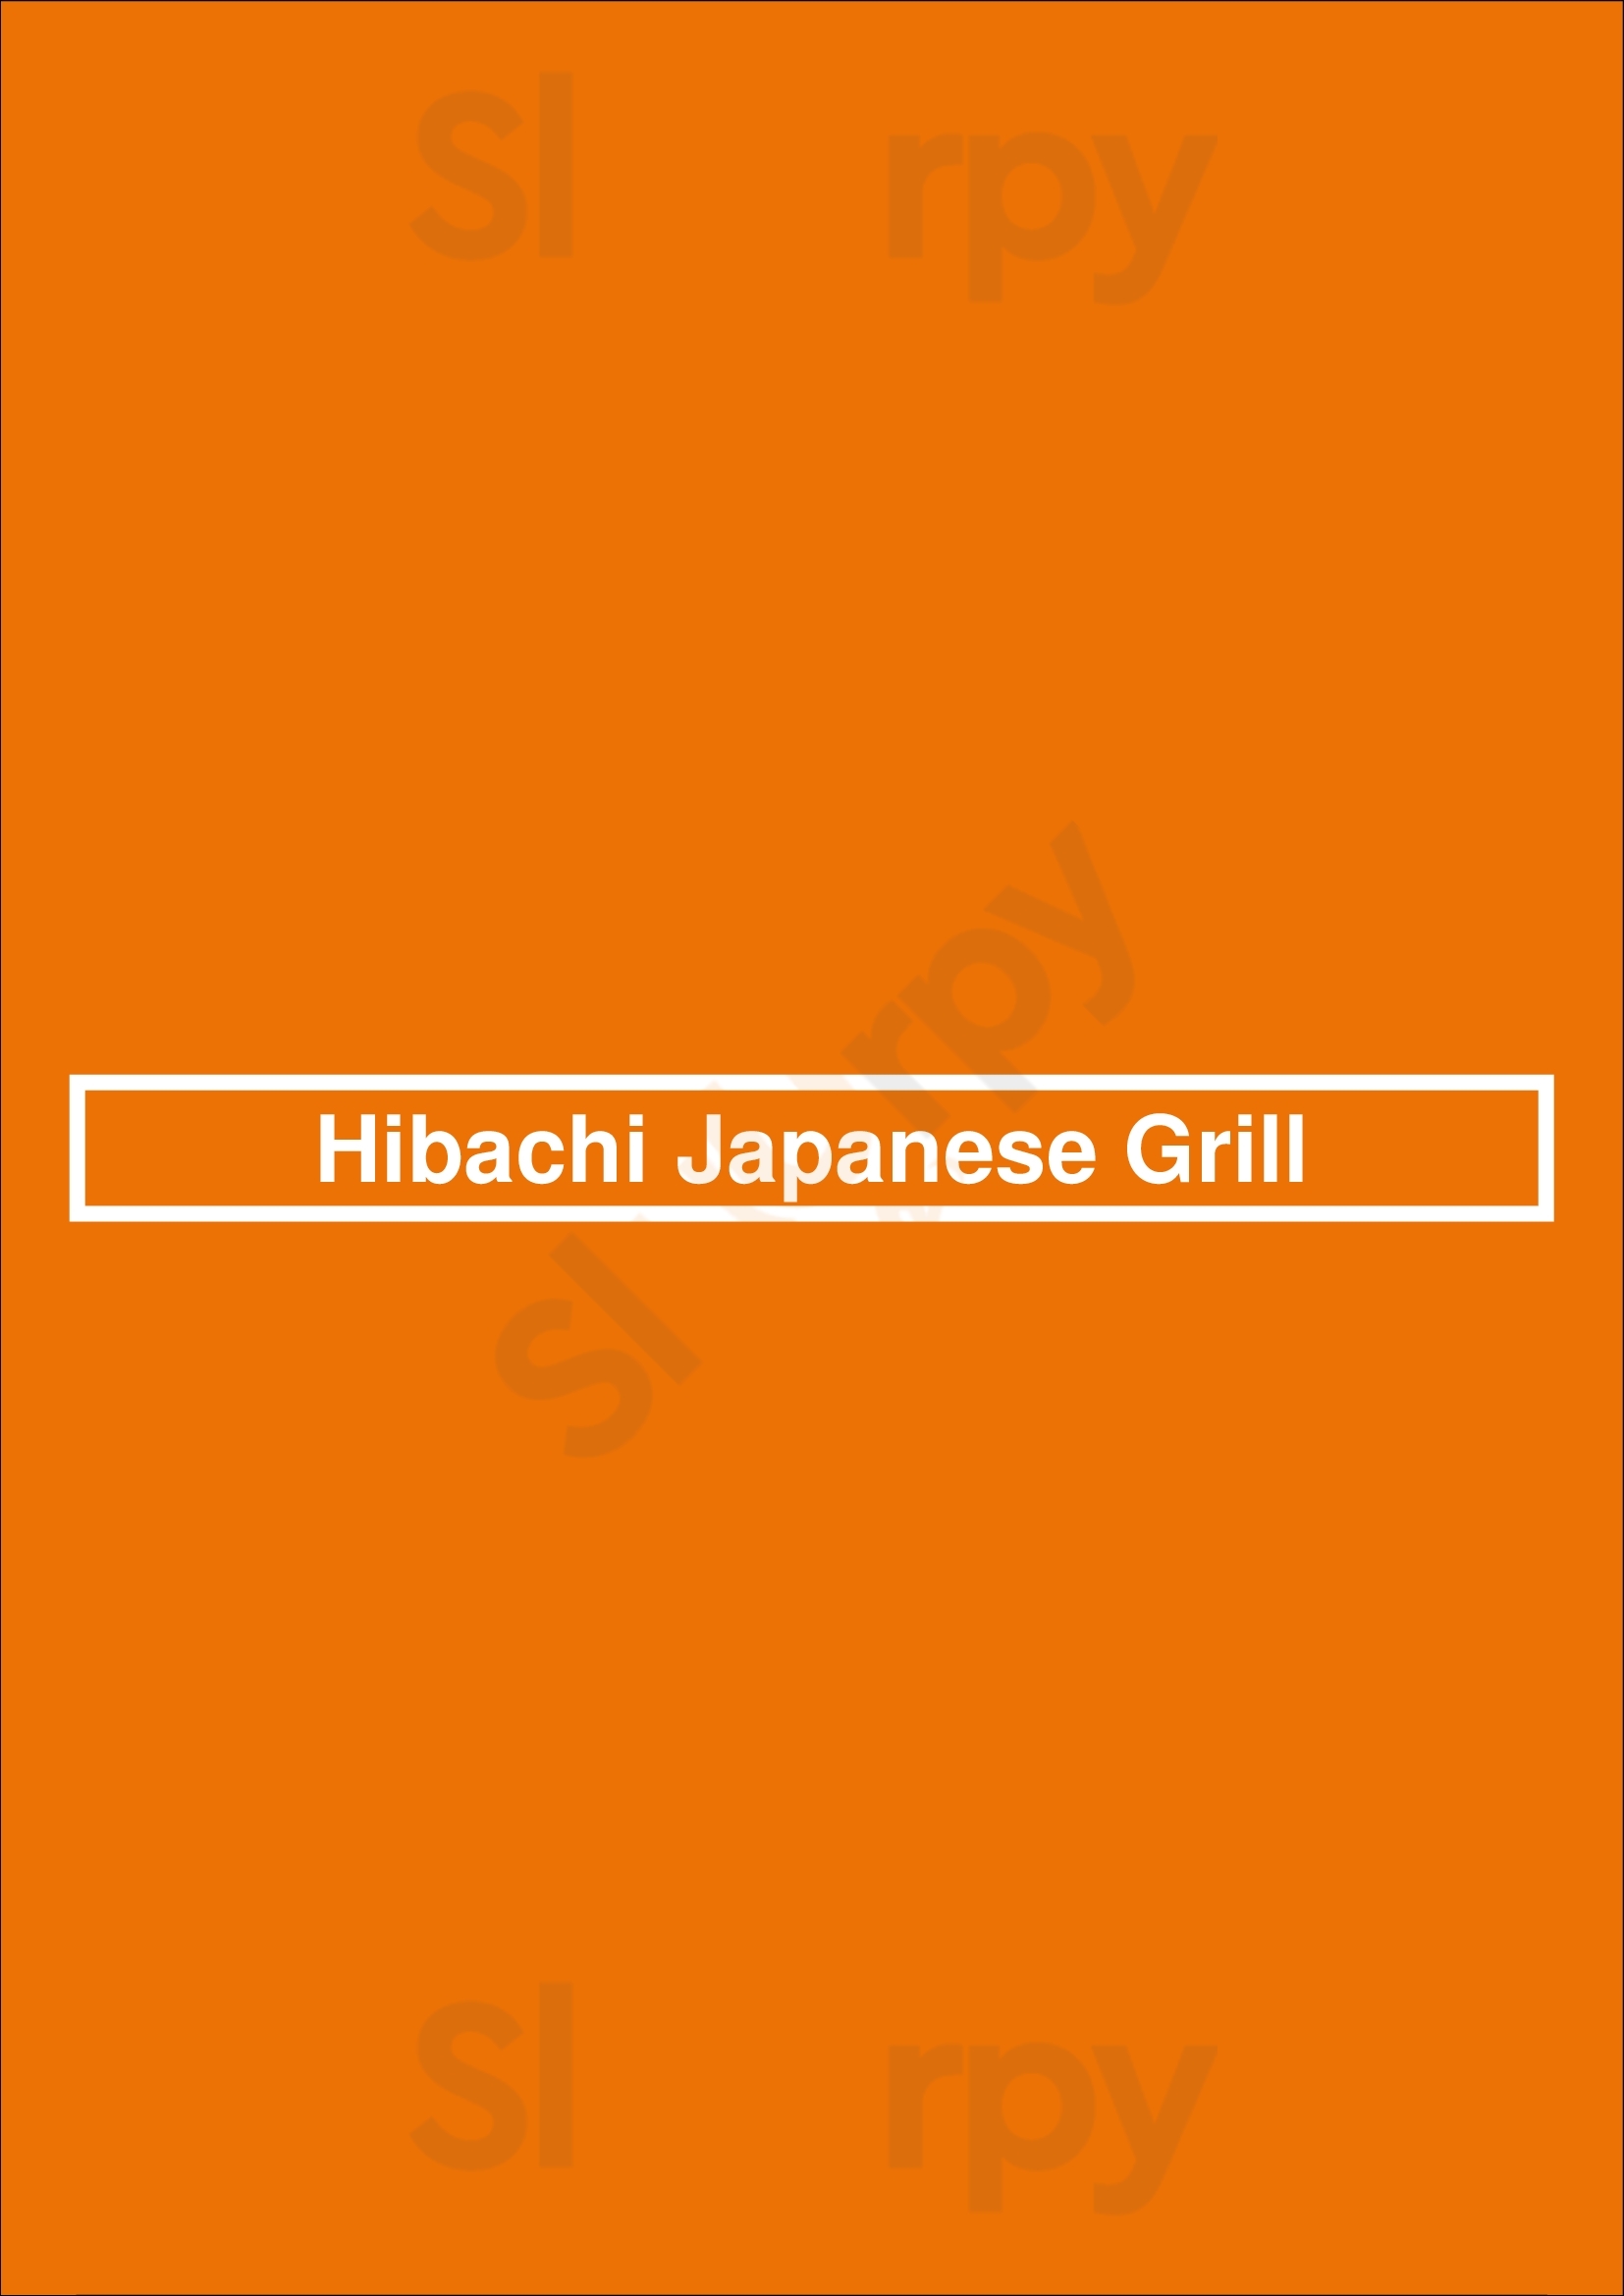 Hibachi Japanese Grill Melbourne Menu - 1